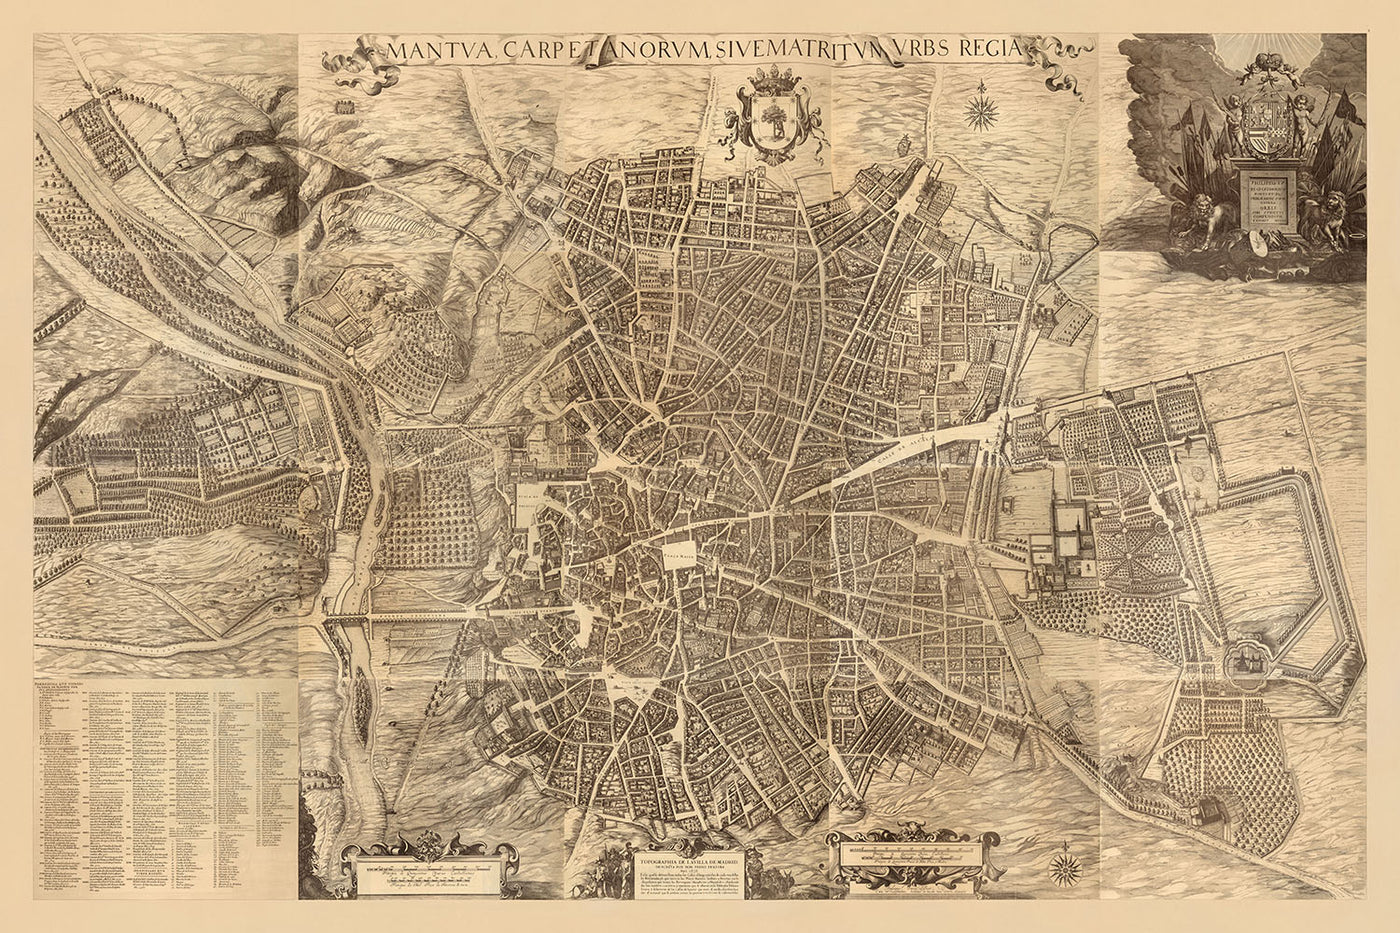 Rare Old Large Map of Madrid by Teixeira, 1656: Plaza Mayor, Calle Mayor, Calle de Alcalá, Major Churches, Convents